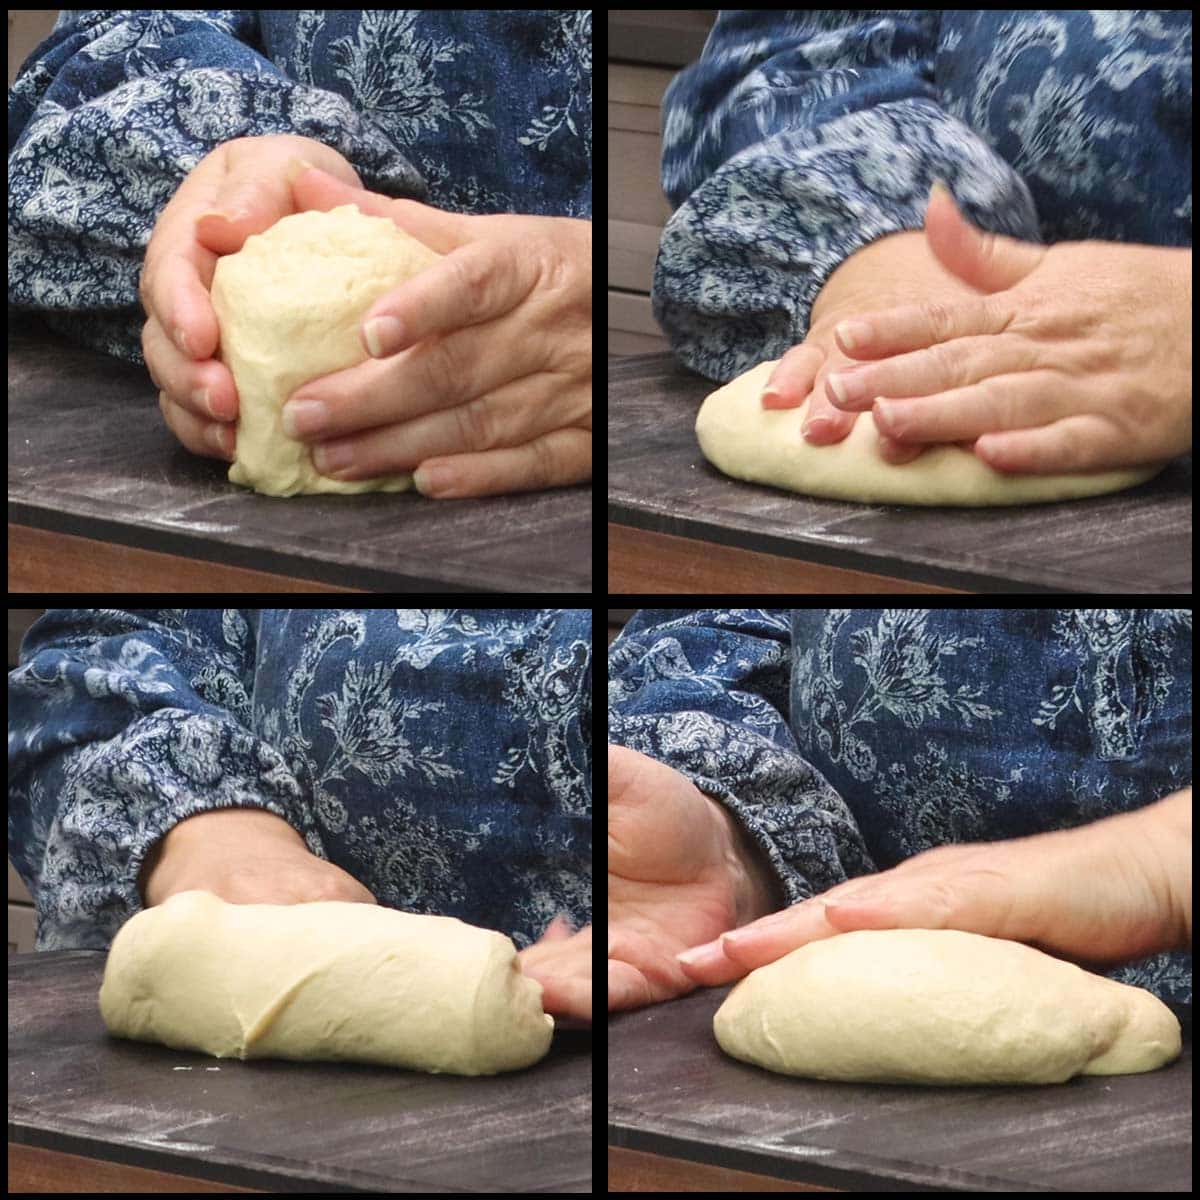 kneading the brioche dough by hand.